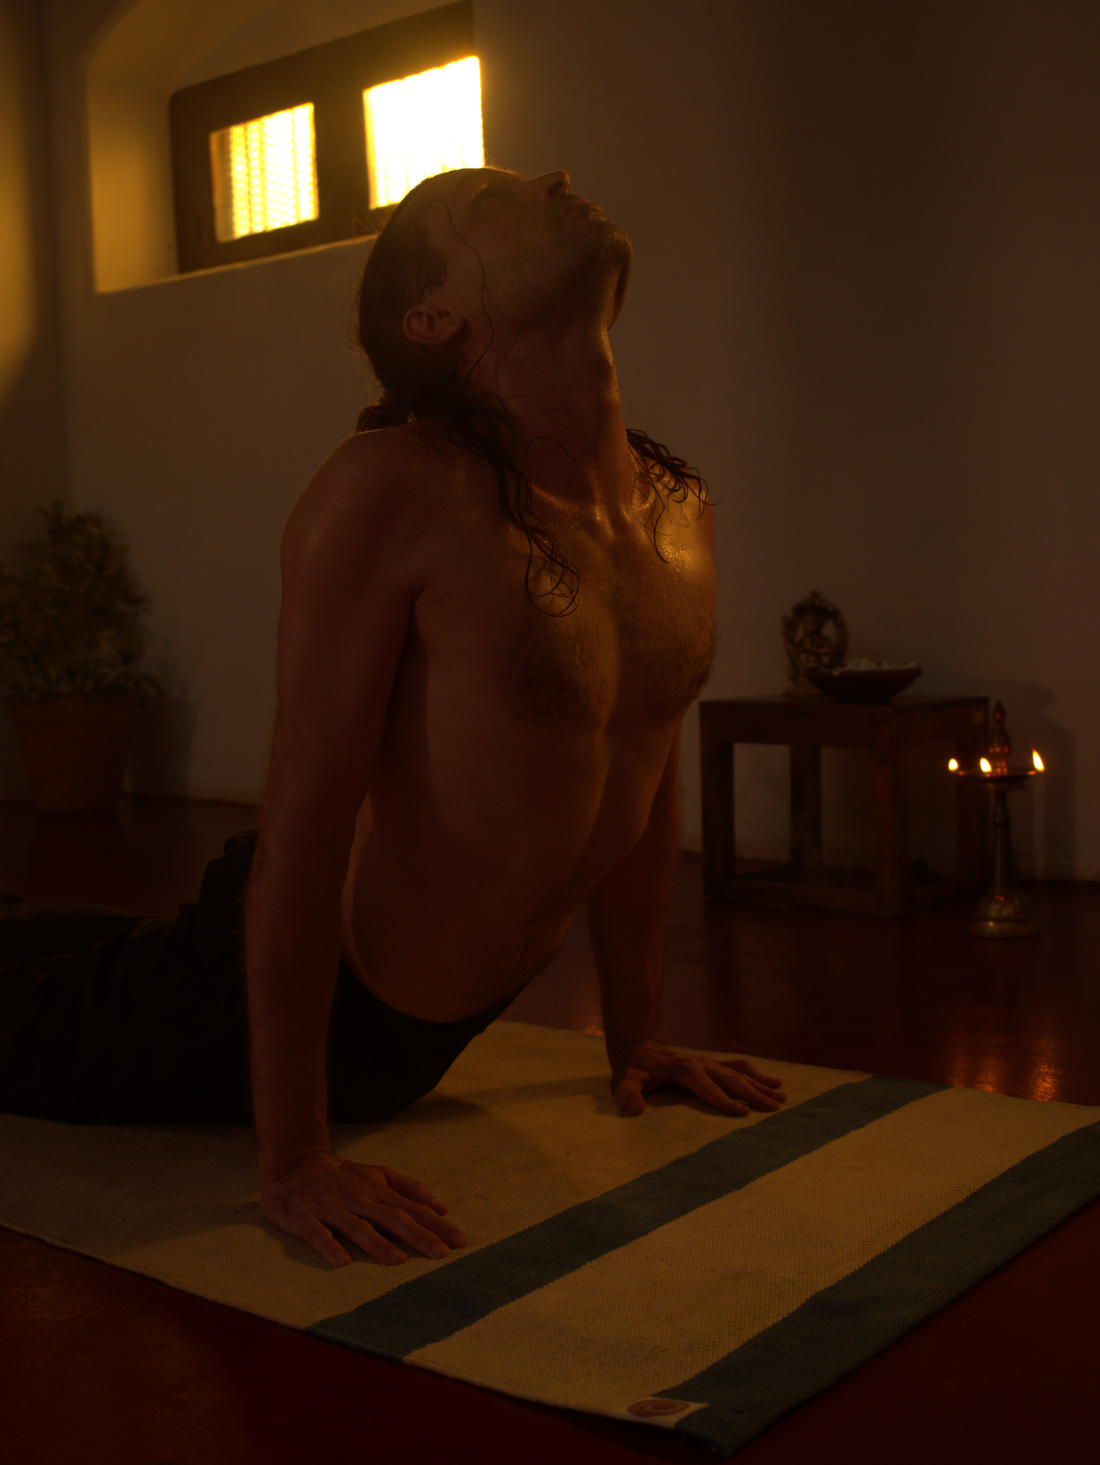 Upward facing dog - young man practicing yoga on organic cotton yoga mat